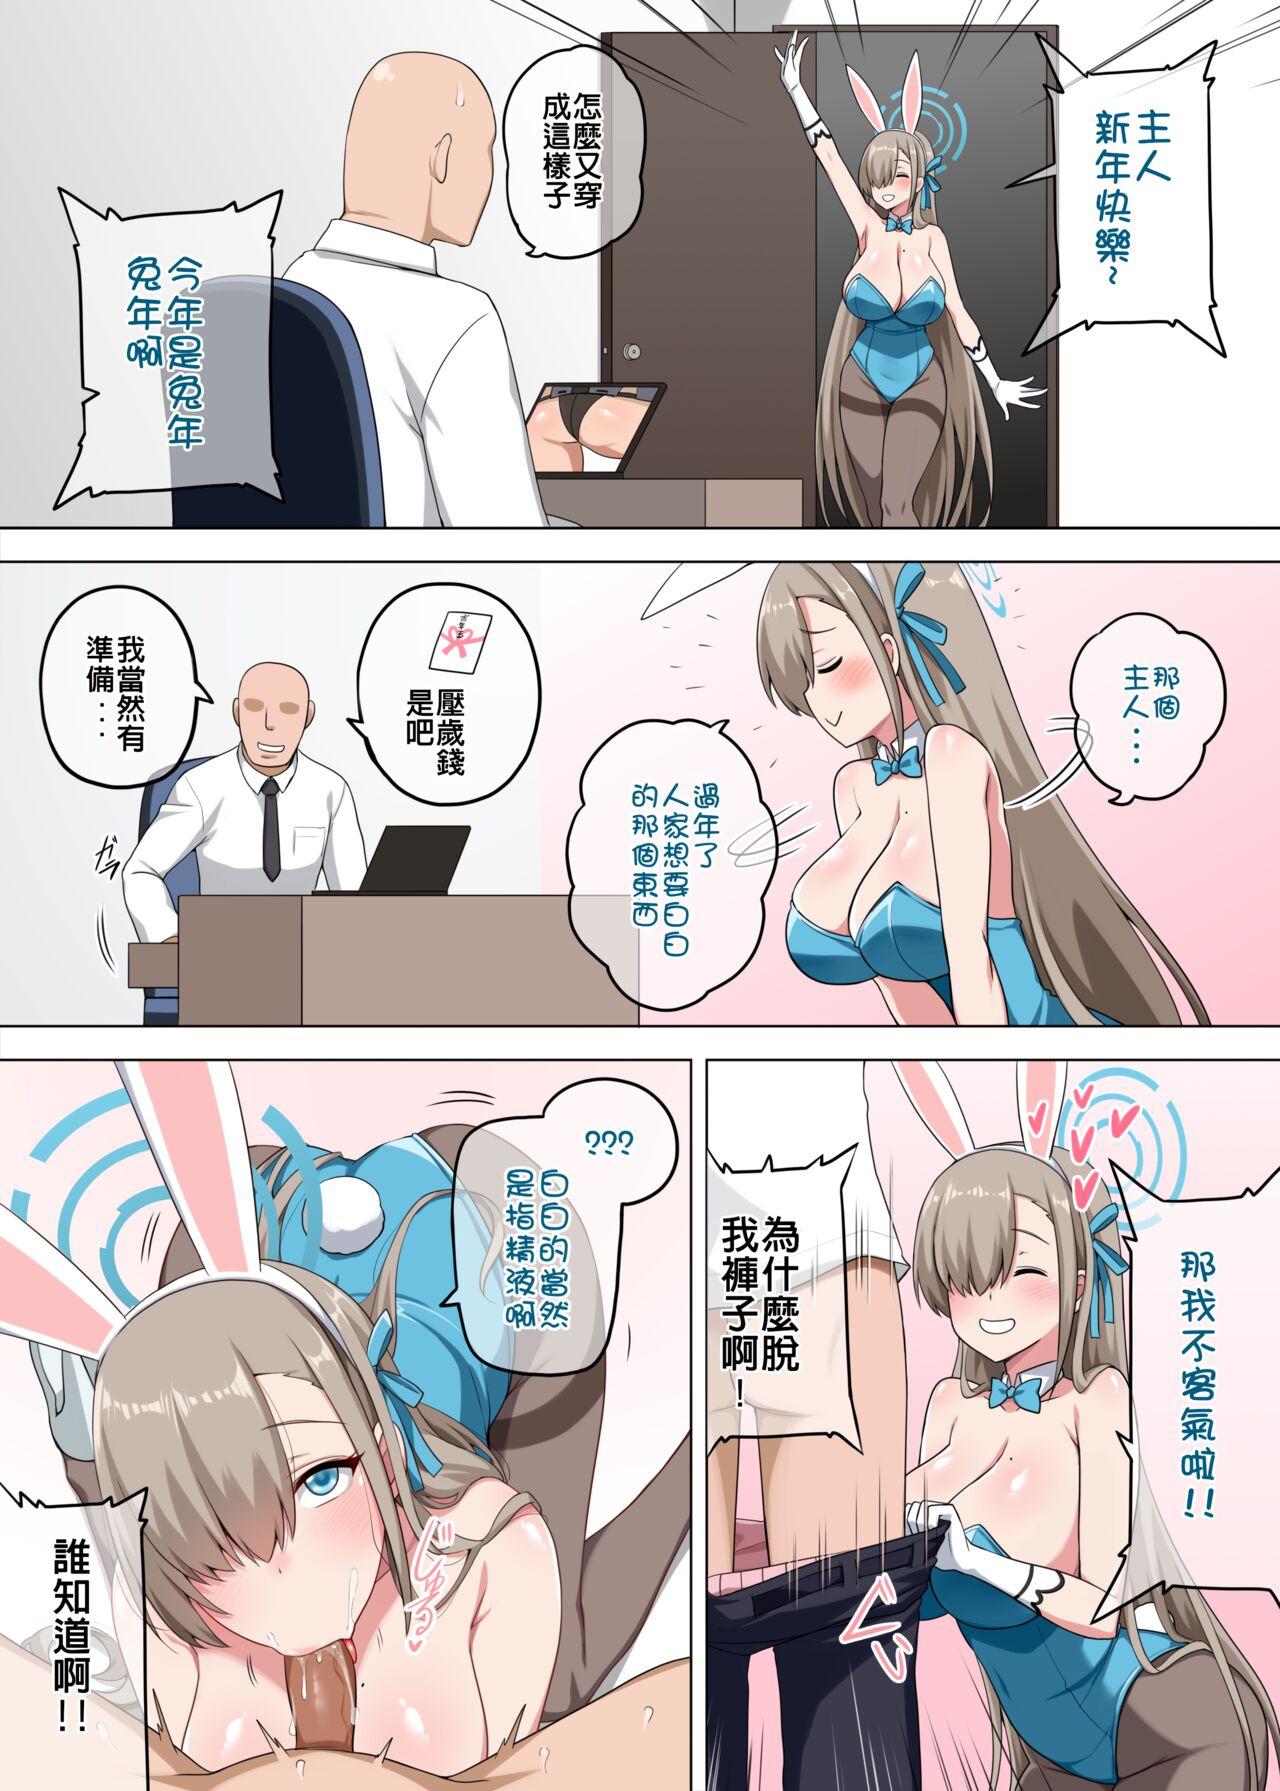 Foreplay Asuna Bunny Girl - Blue archive Dotado - Page 1